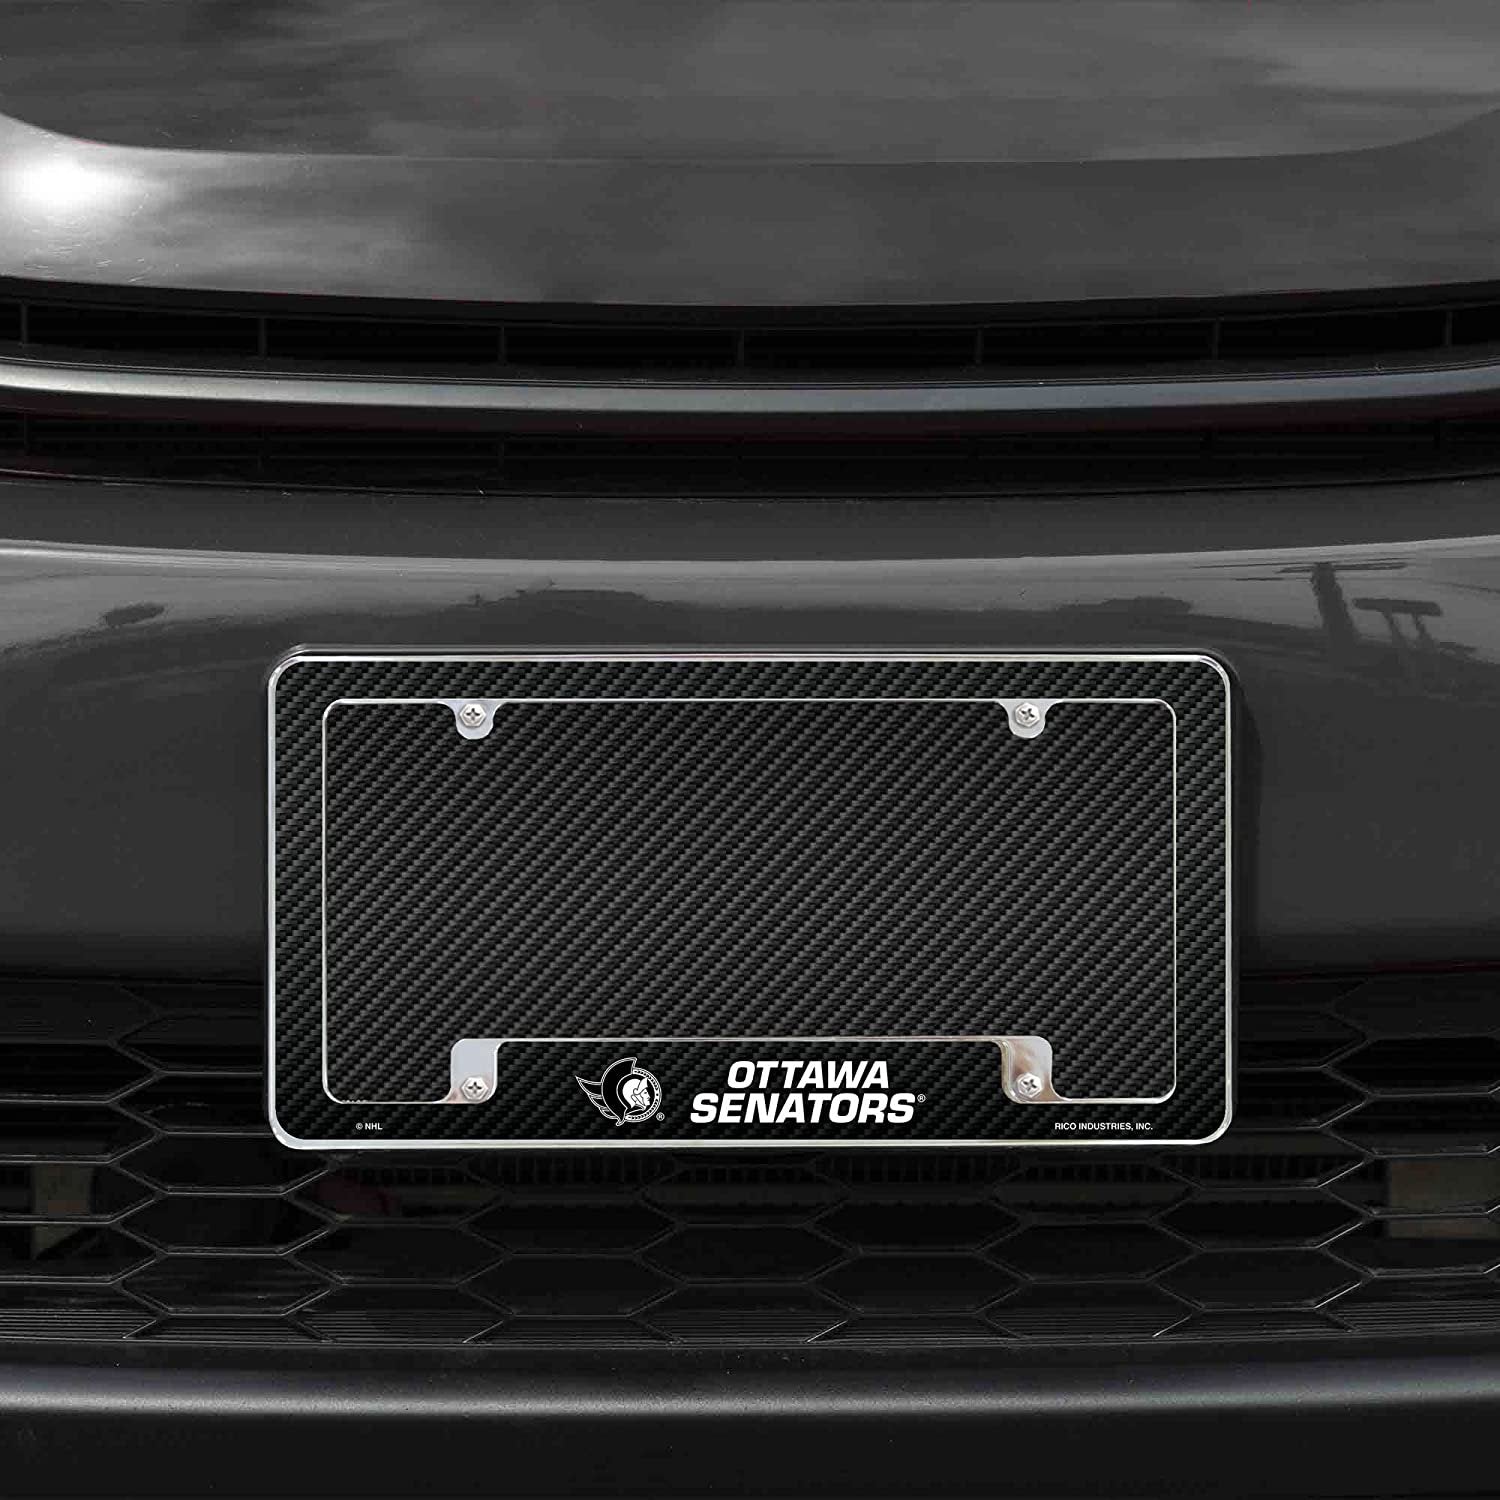 Ottawa Senators Metal License Plate Frame Chrome Tag Cover Carbon Fiber Design 6x12 Inch